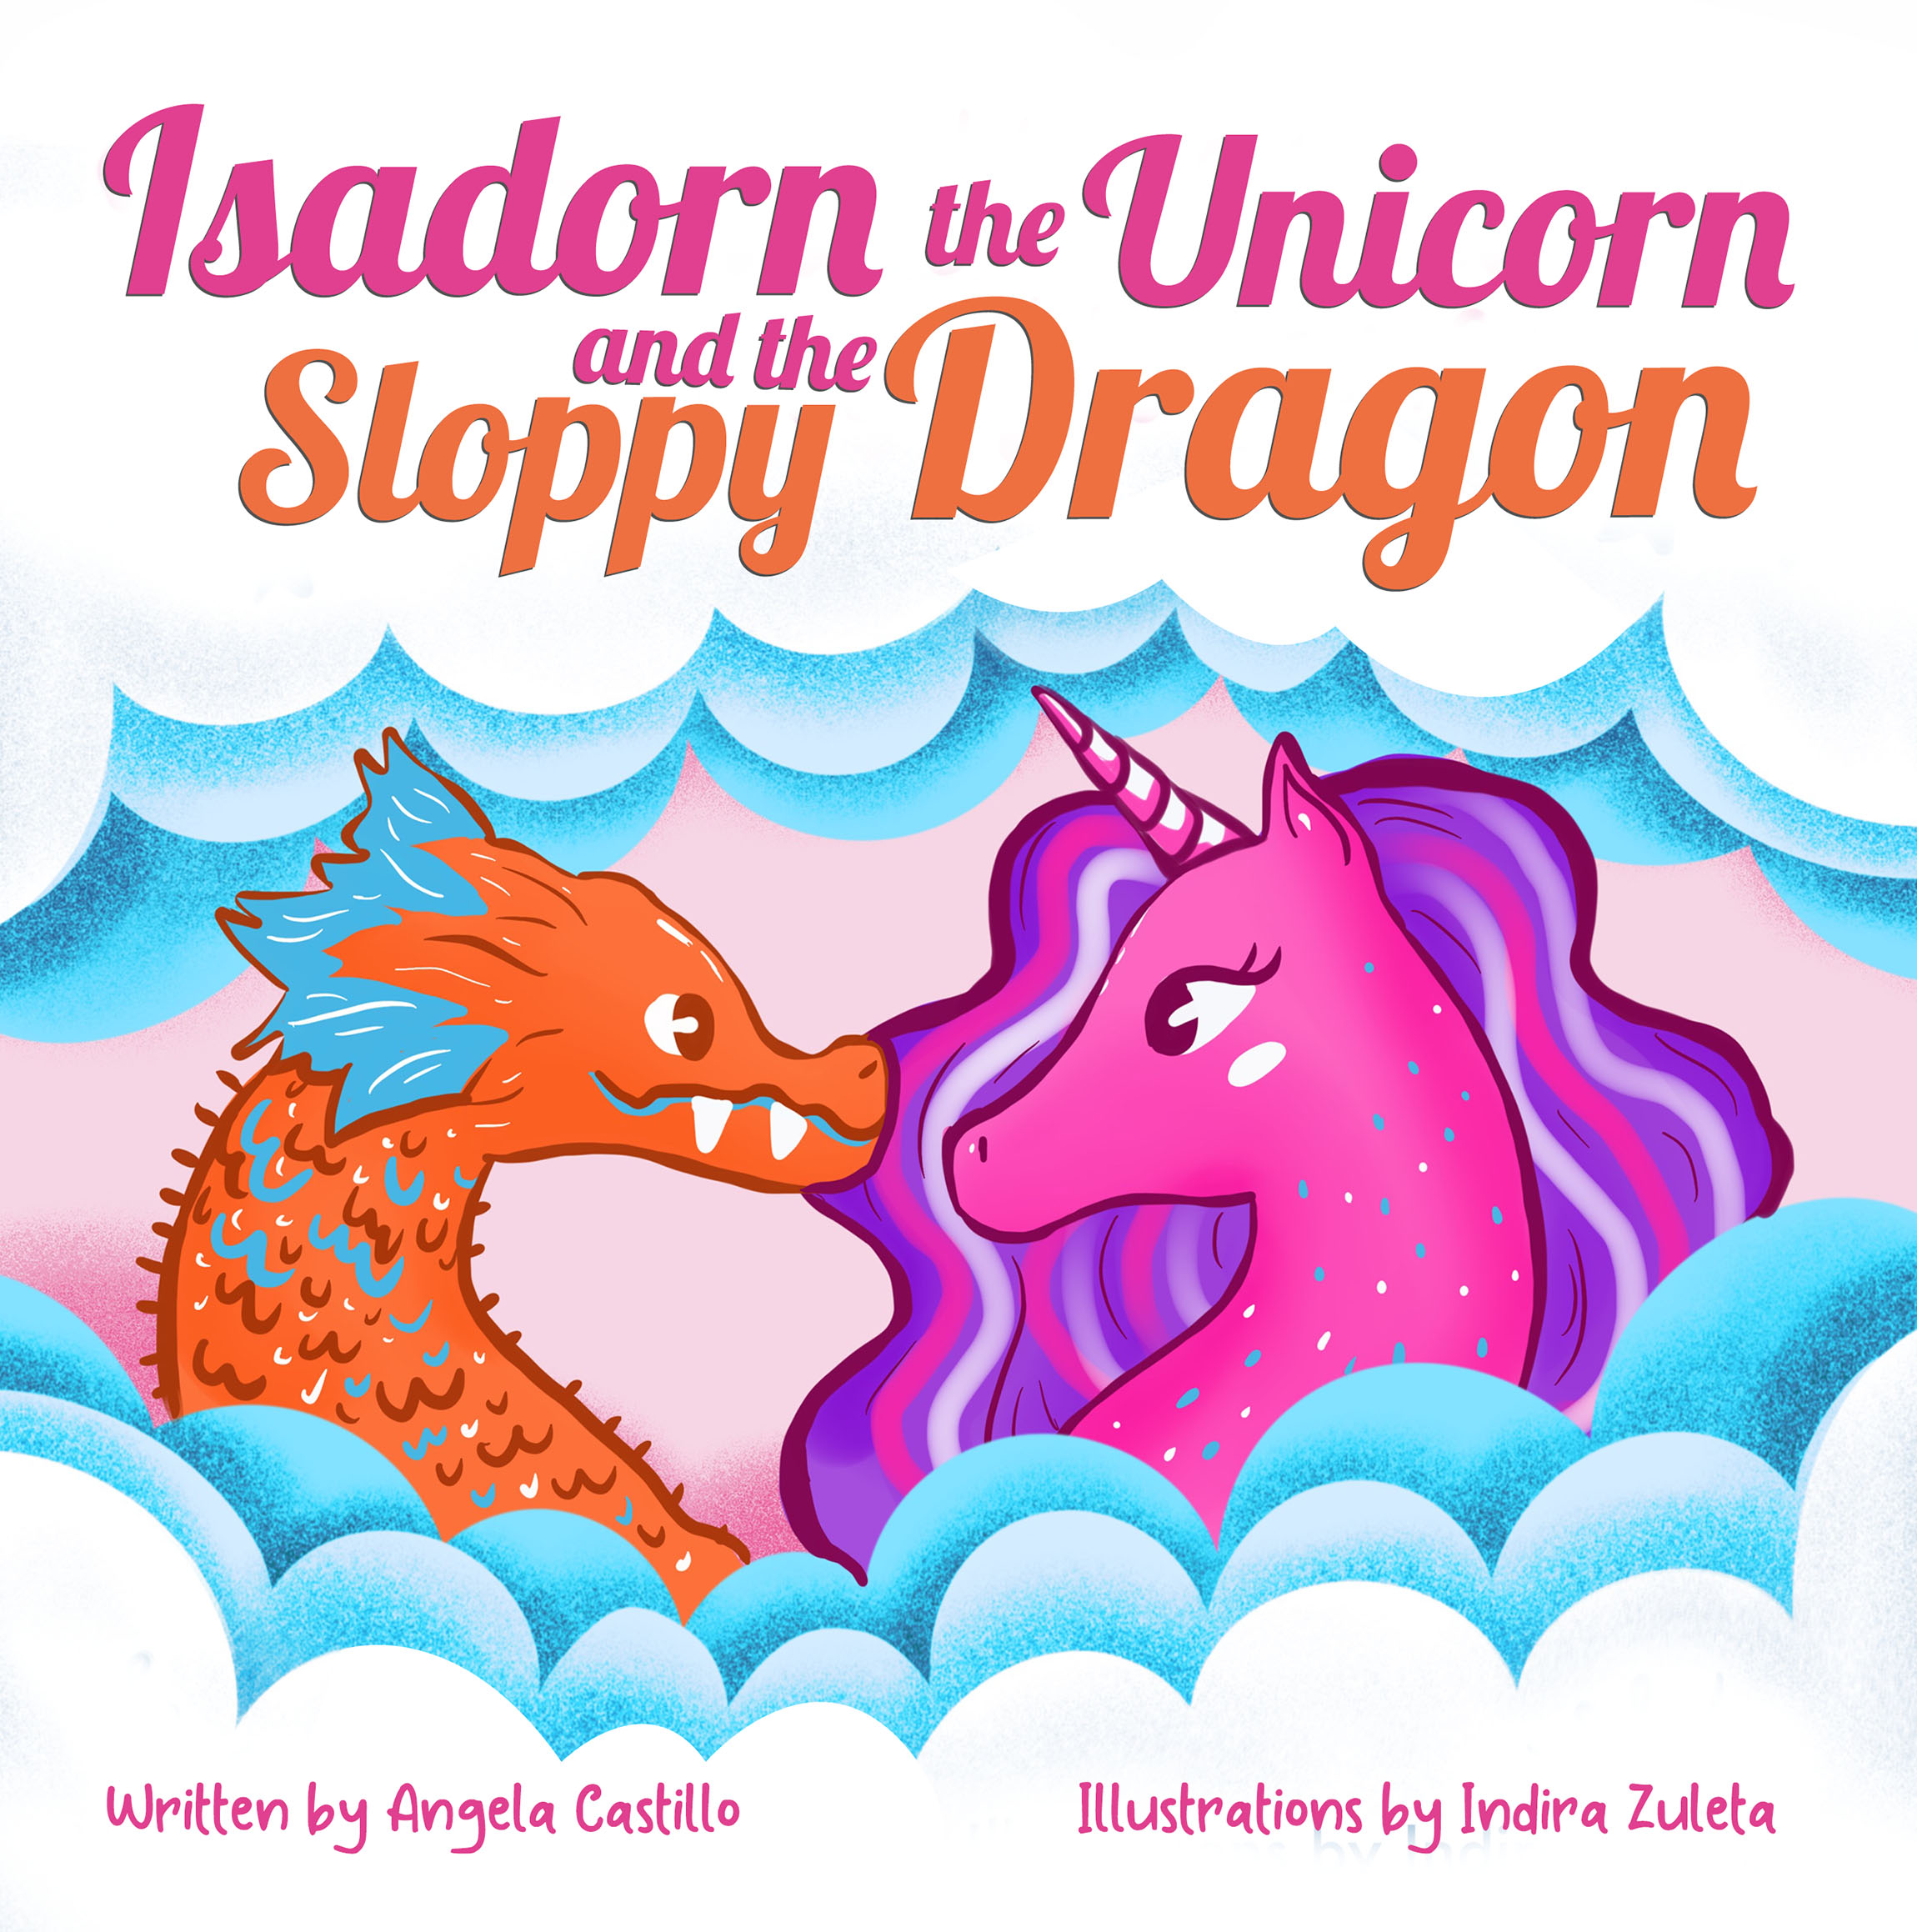 FREE: Isadorn the Unicorn and the Sloppy Dragon by Angela Castillo